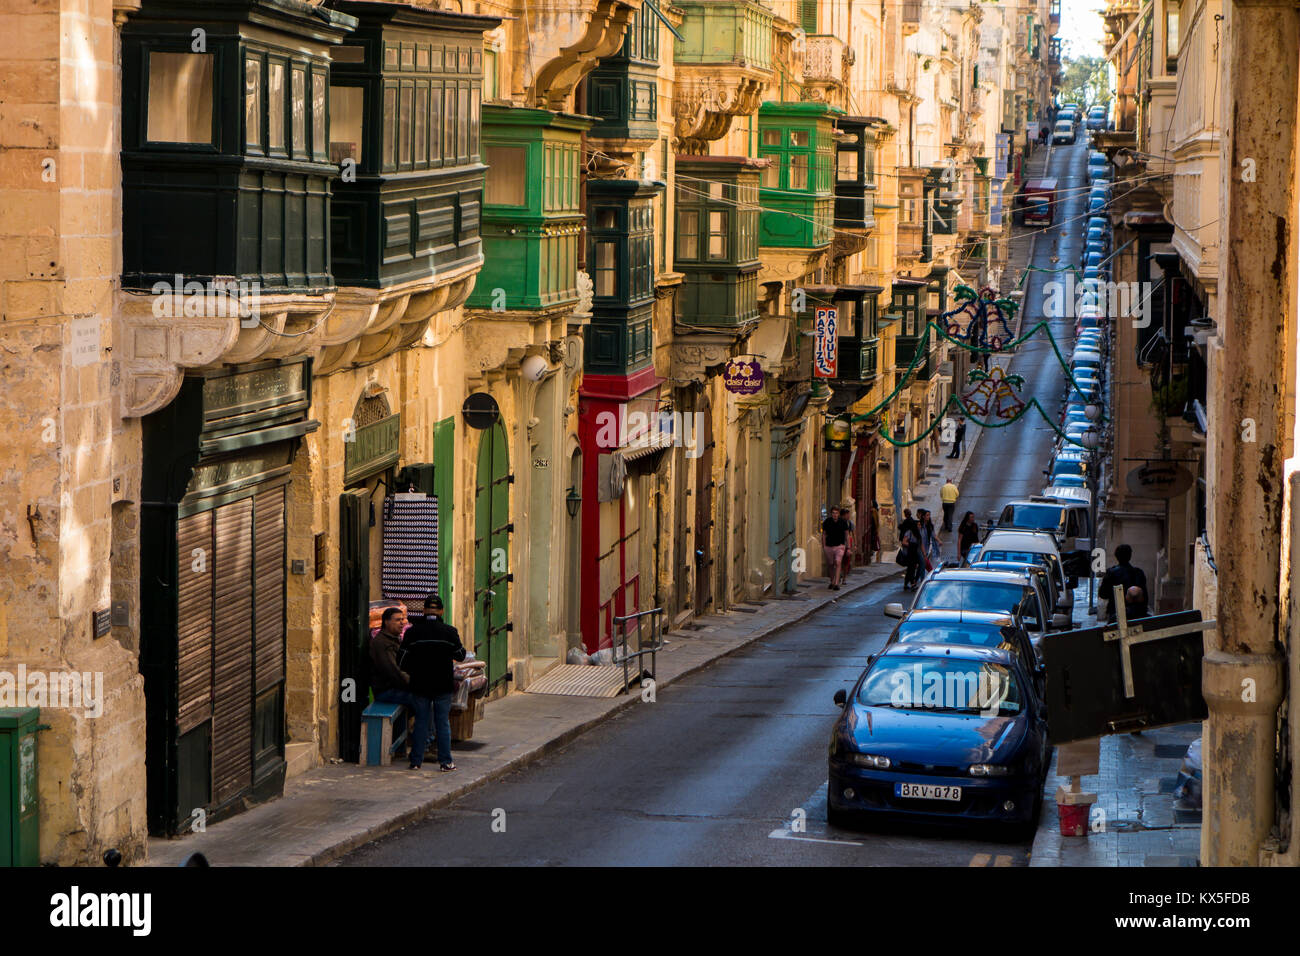 Street scene with Gallarija, typical wooden balcony in Valletta, european capital of culture in 2018, Malta, Europe Stock Photo